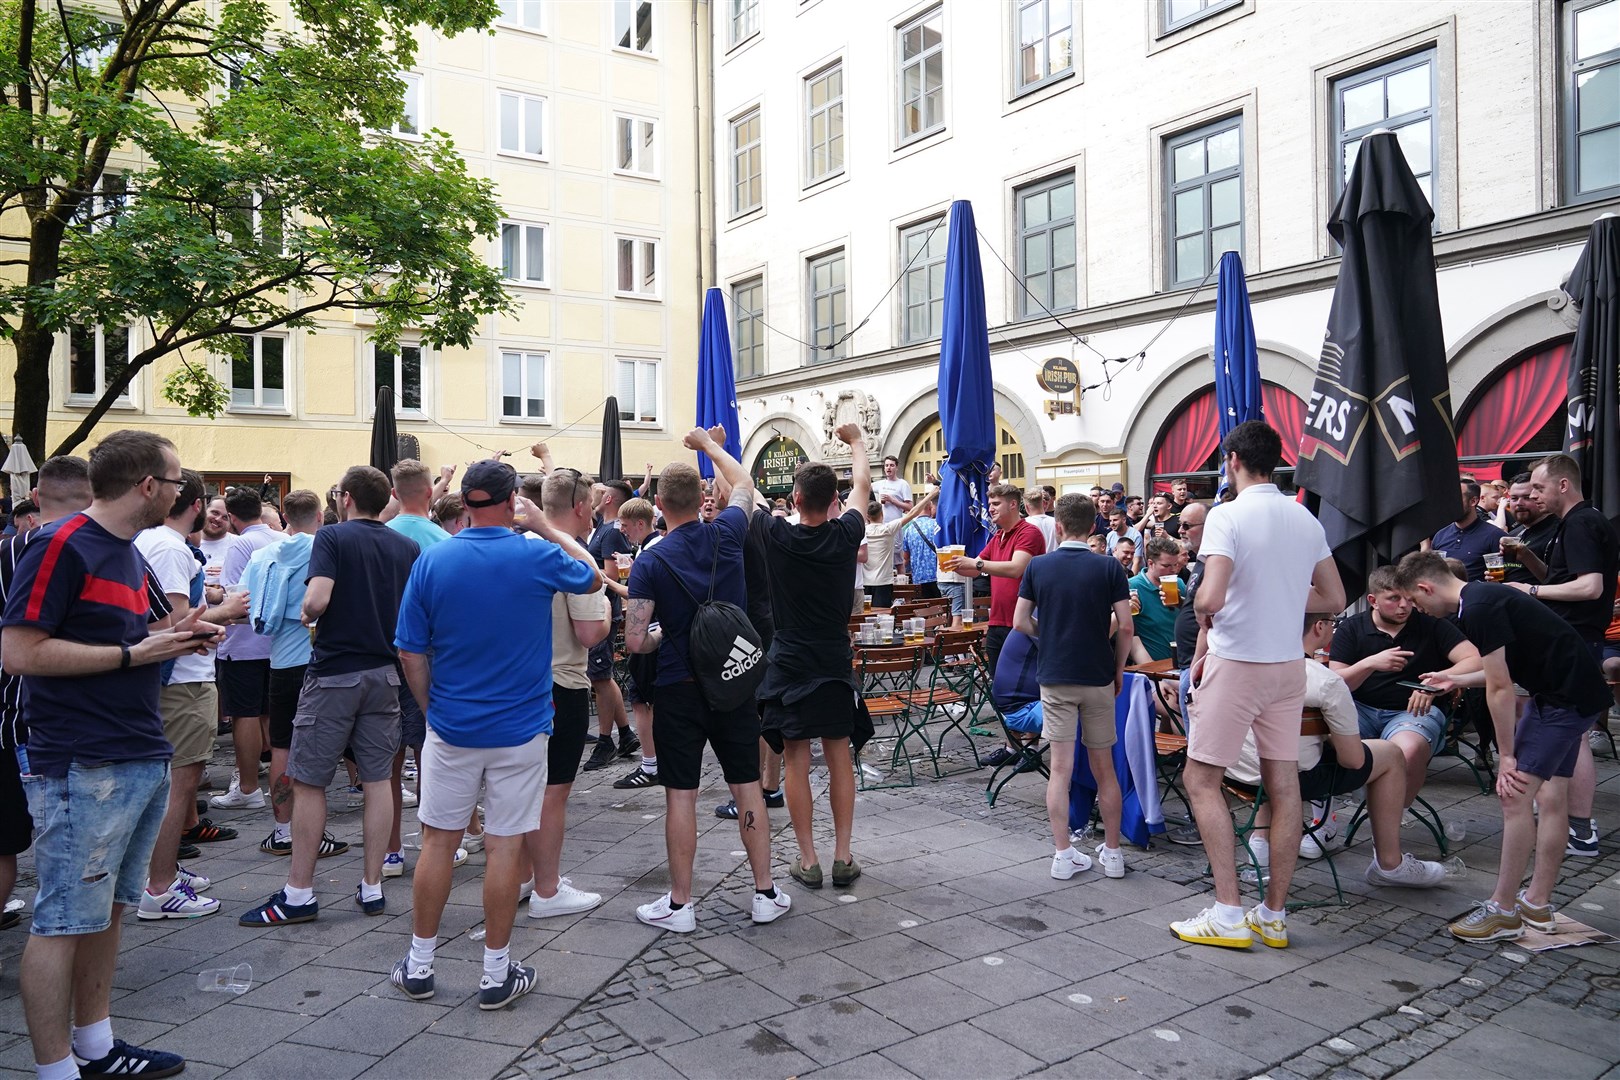 England football fans singing about striker Harry Kane outside Kilians Irish Pub in Frauenplatz square in Munich (Yui Mok/PA)